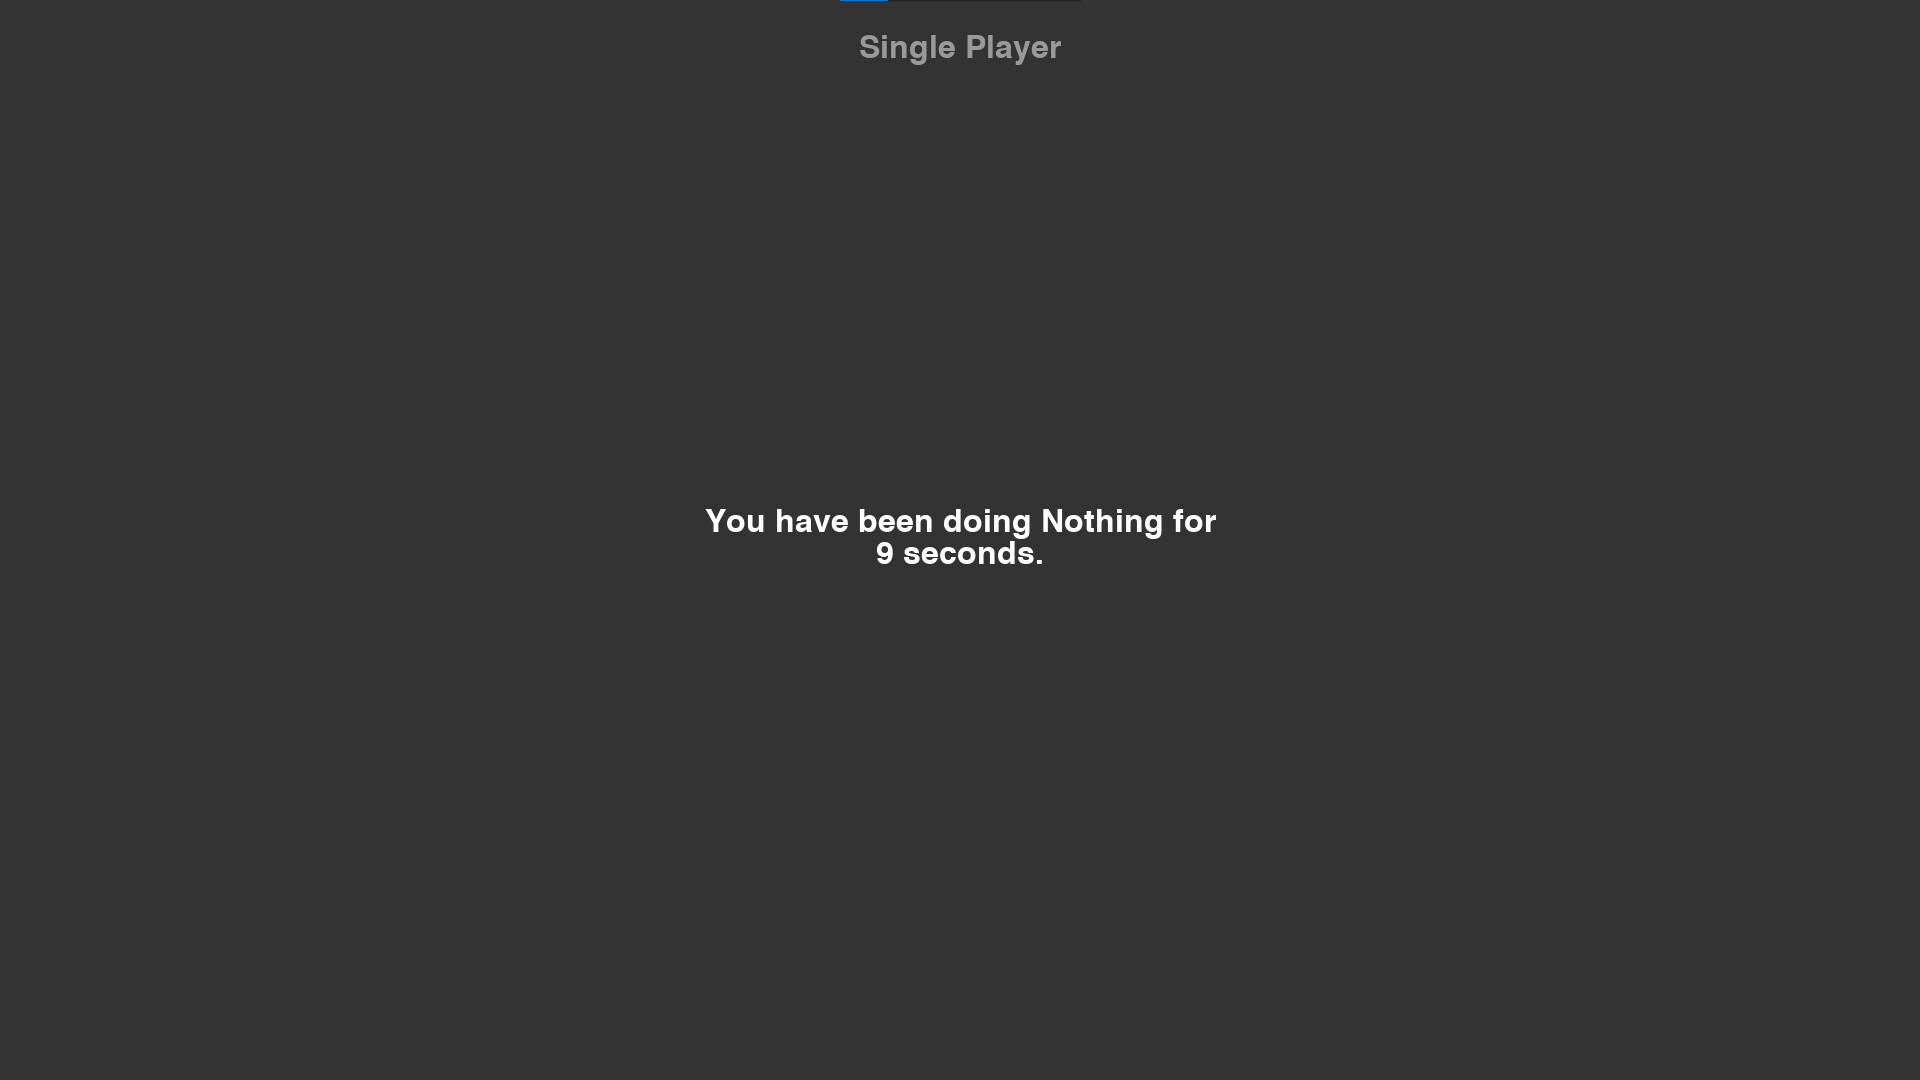 Nothing Together screenshot game